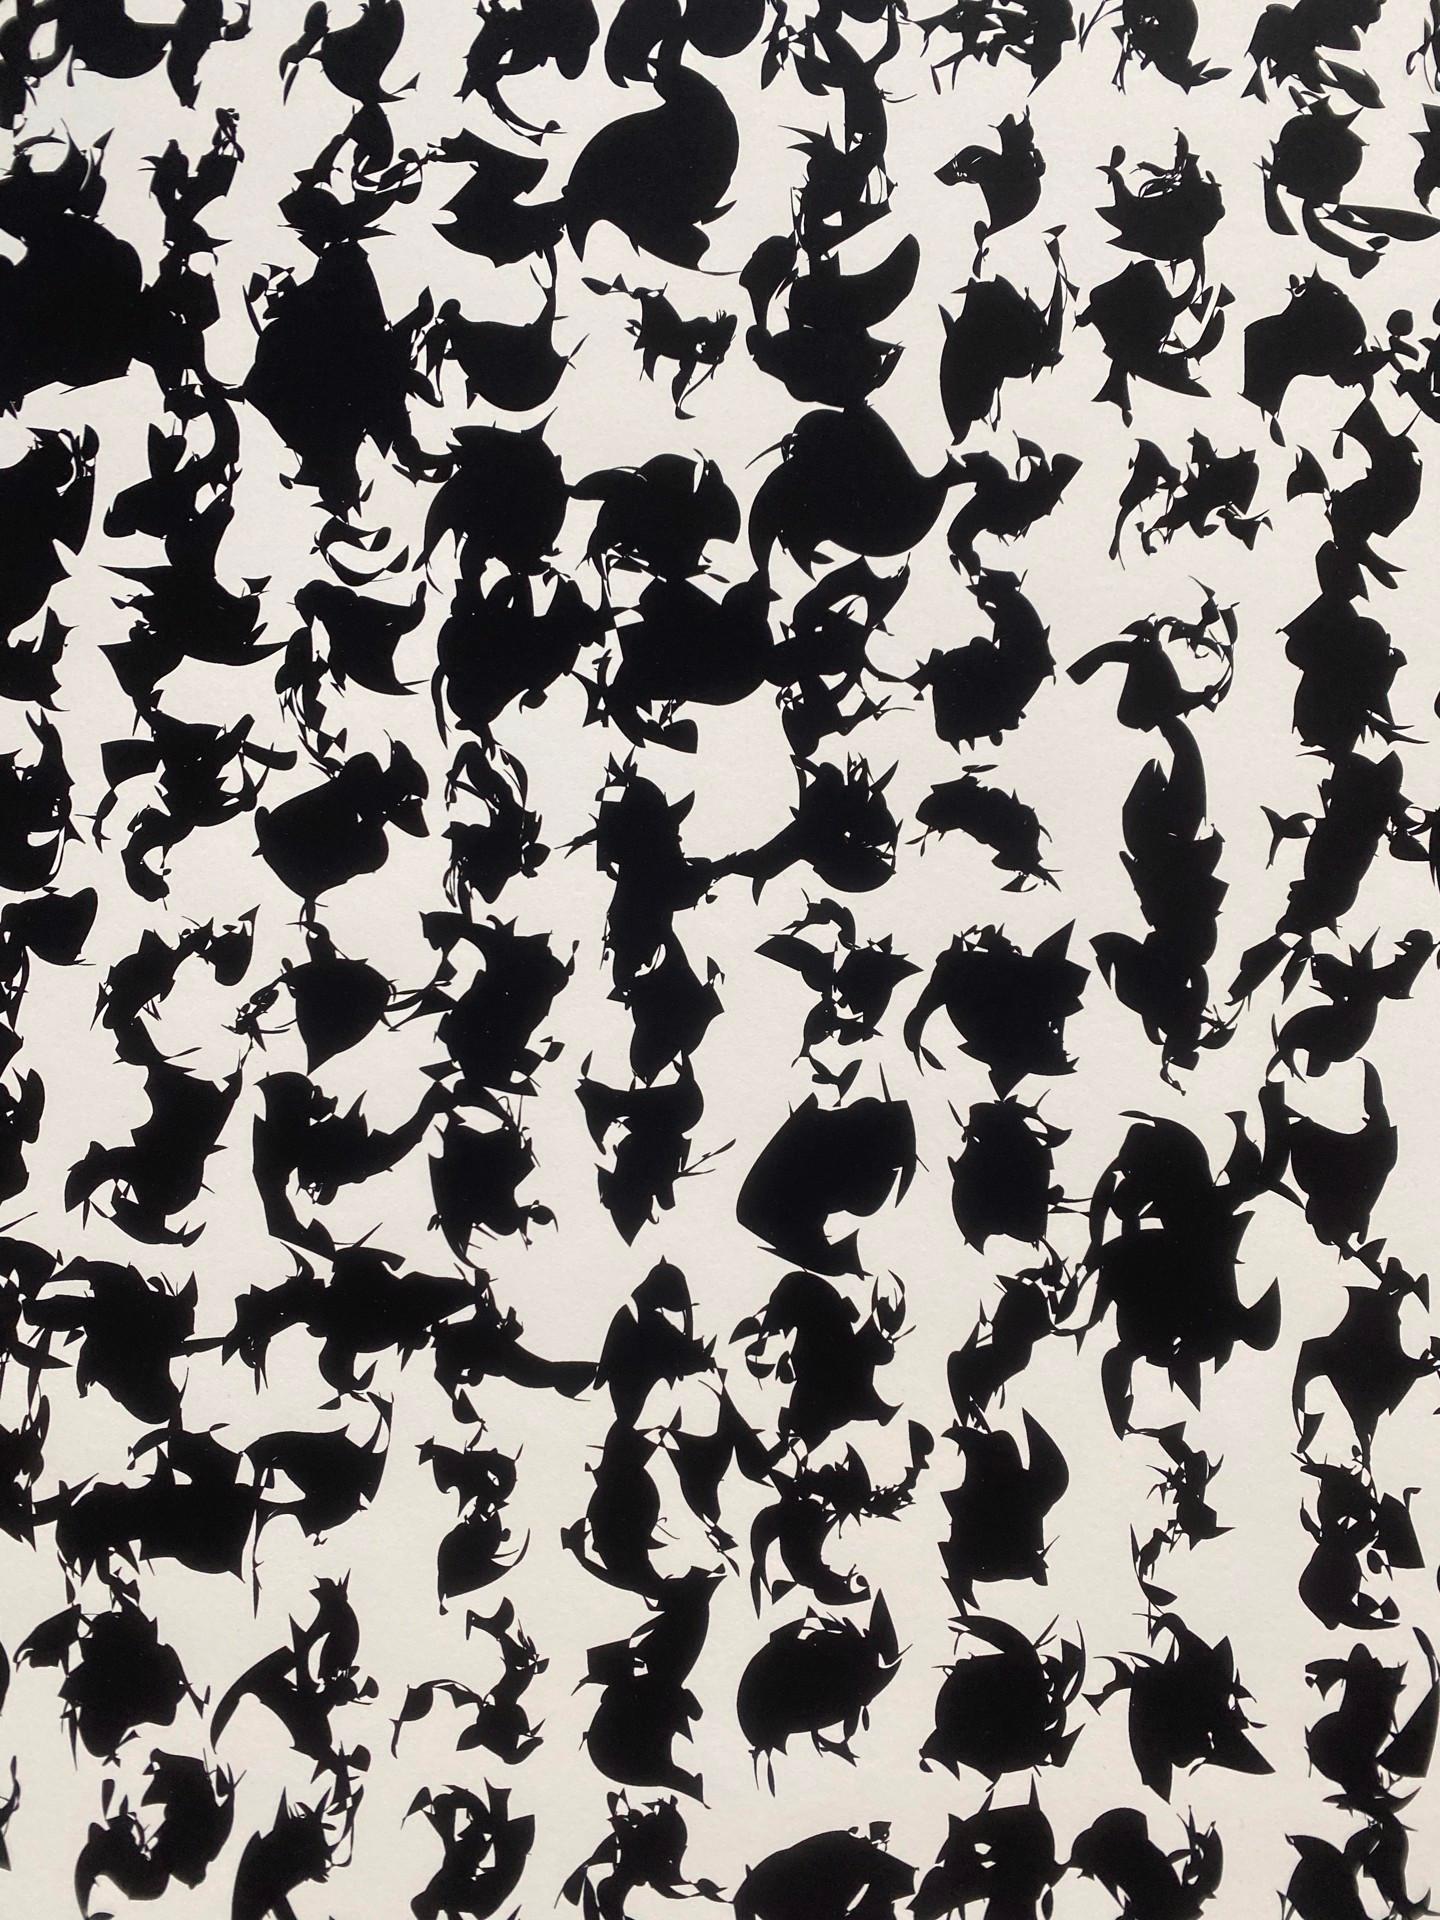 12-20-11-5 - Abstract Print by Peter Feldstein